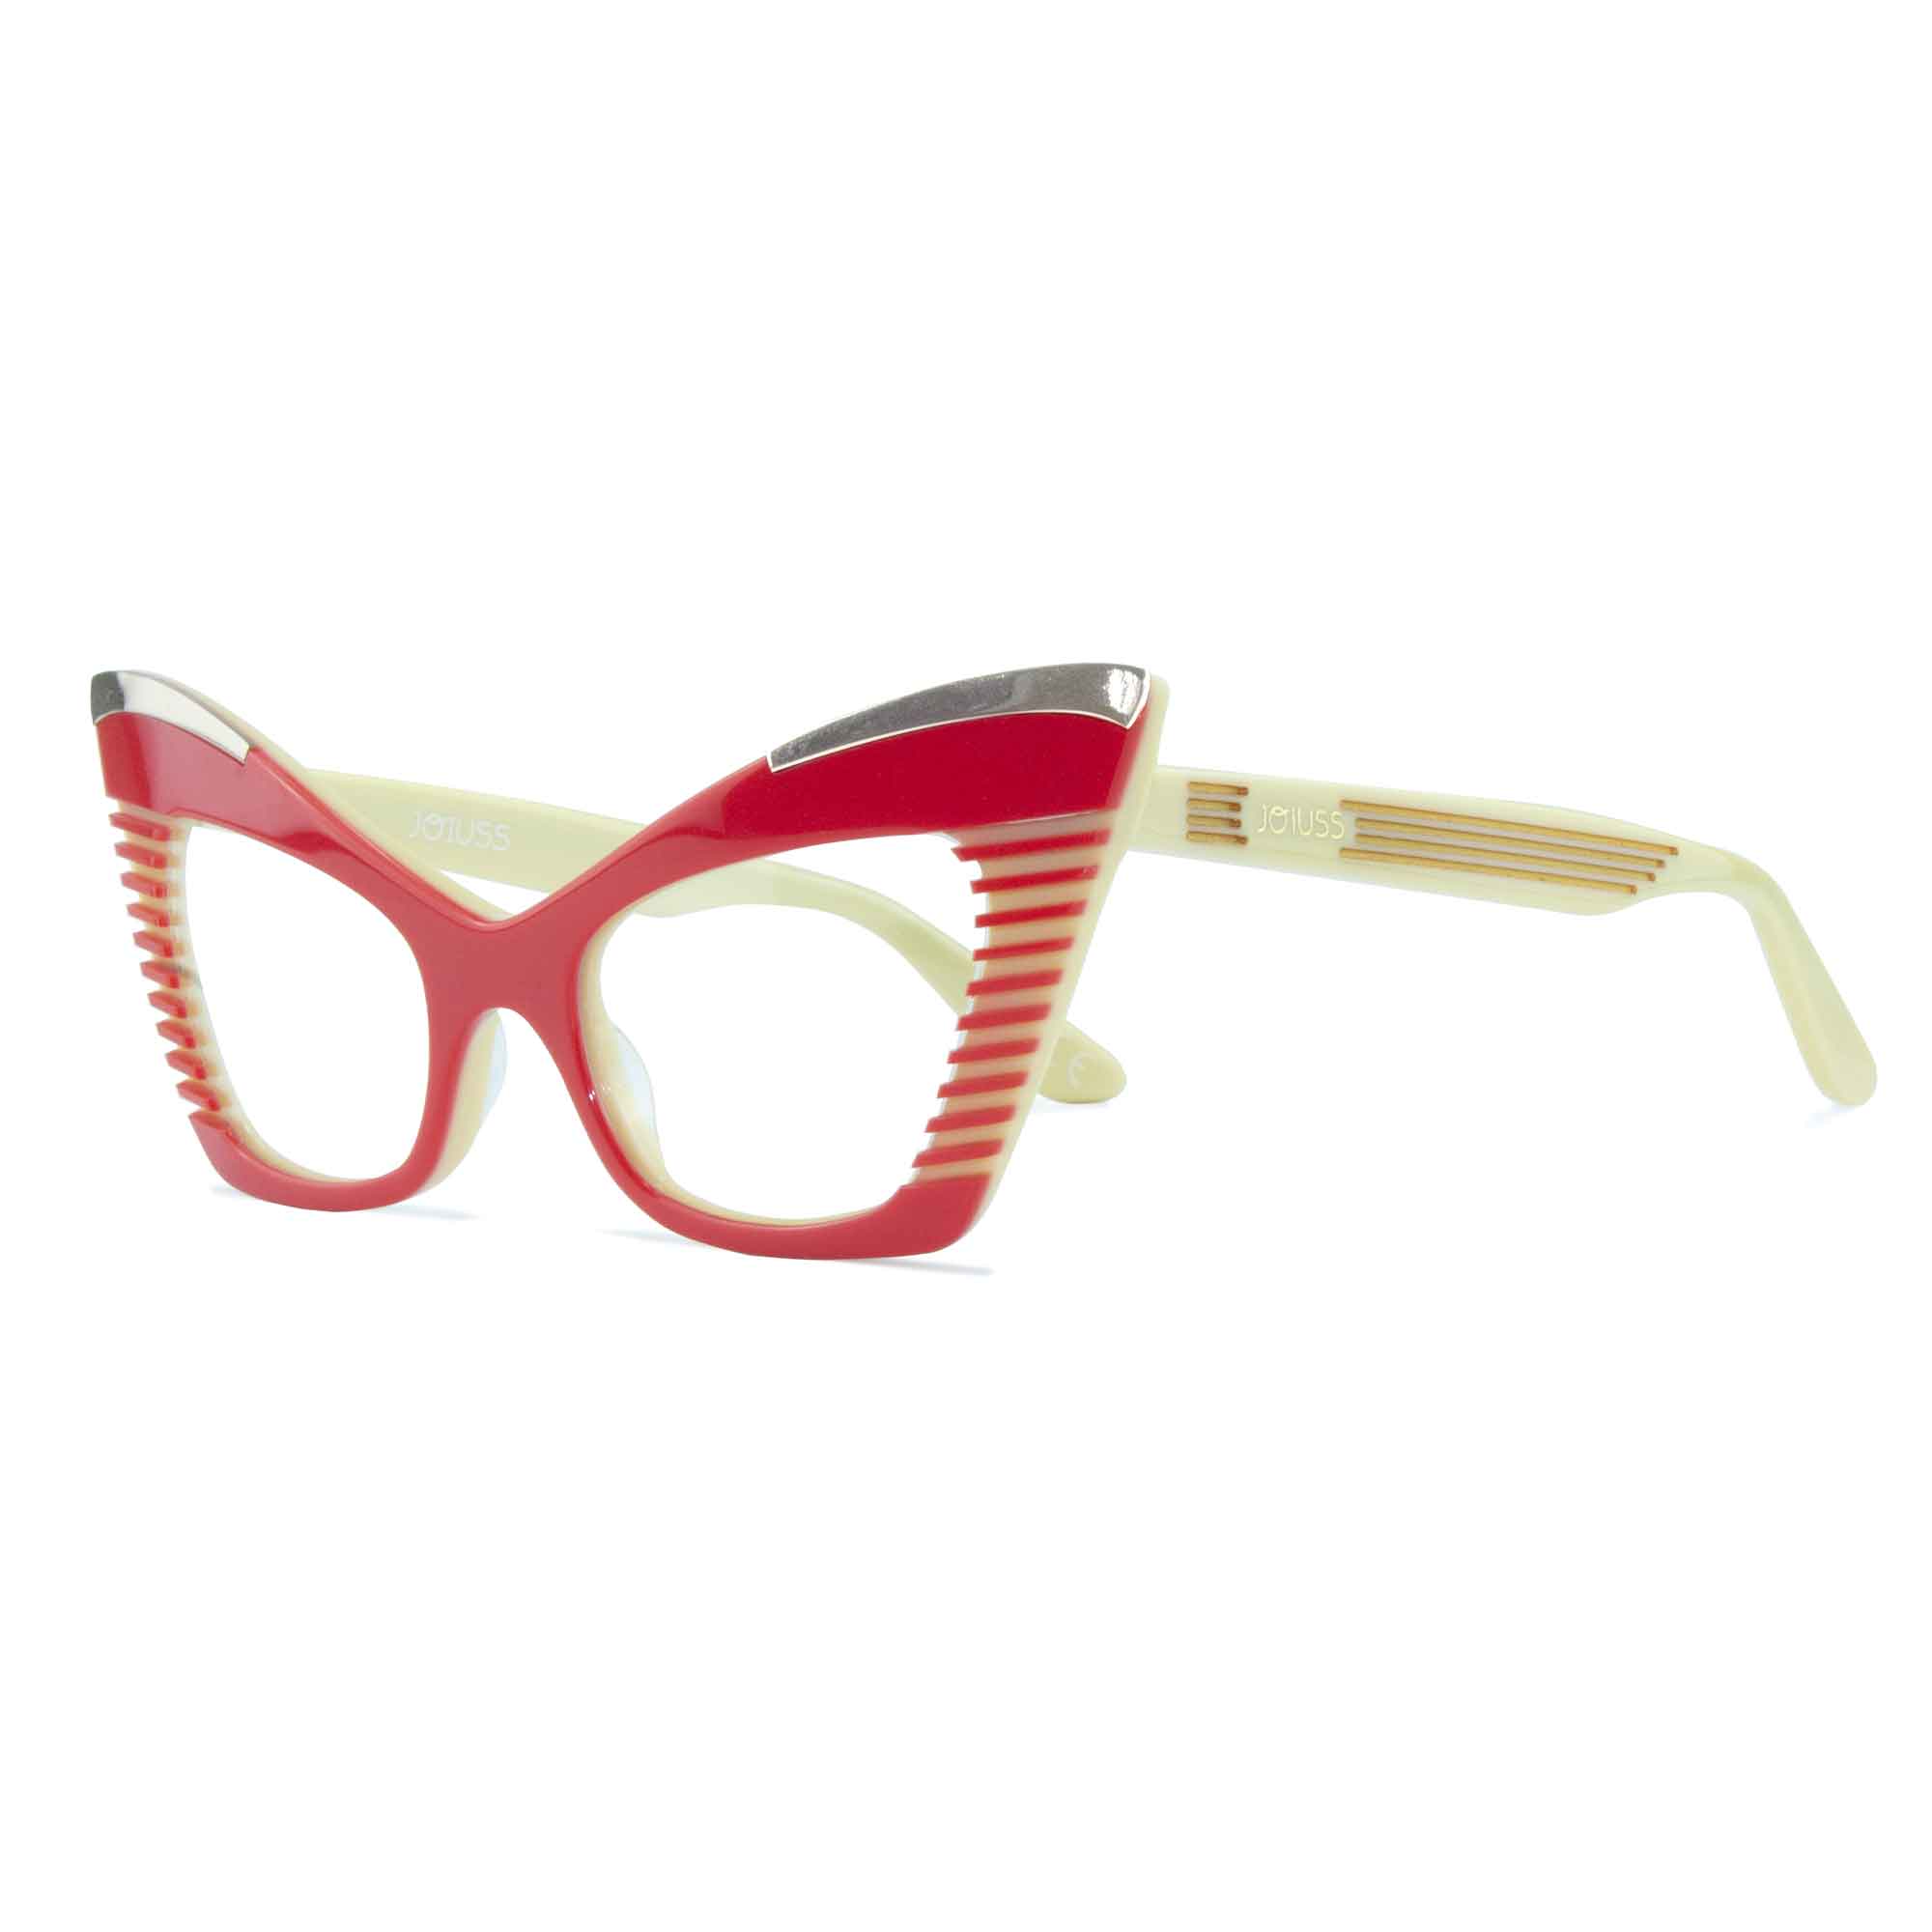 Cat Eye Glasses - Red & Cream - Doreen